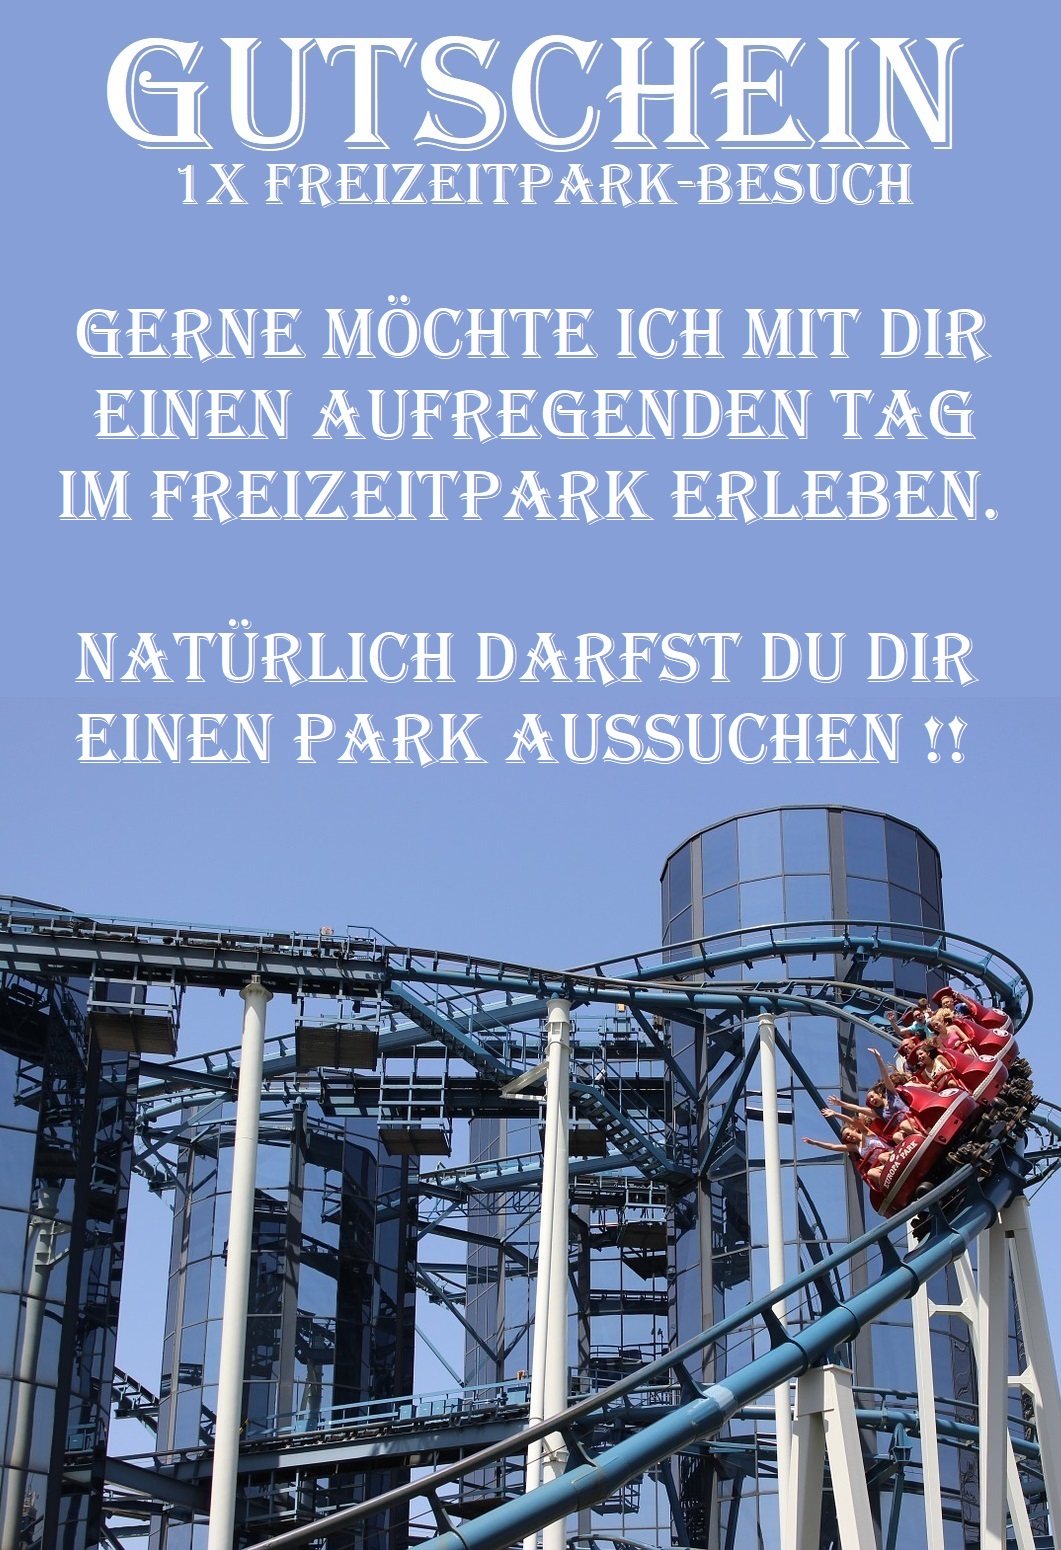 Europapark Rabatt Gutschein Ausdrucken